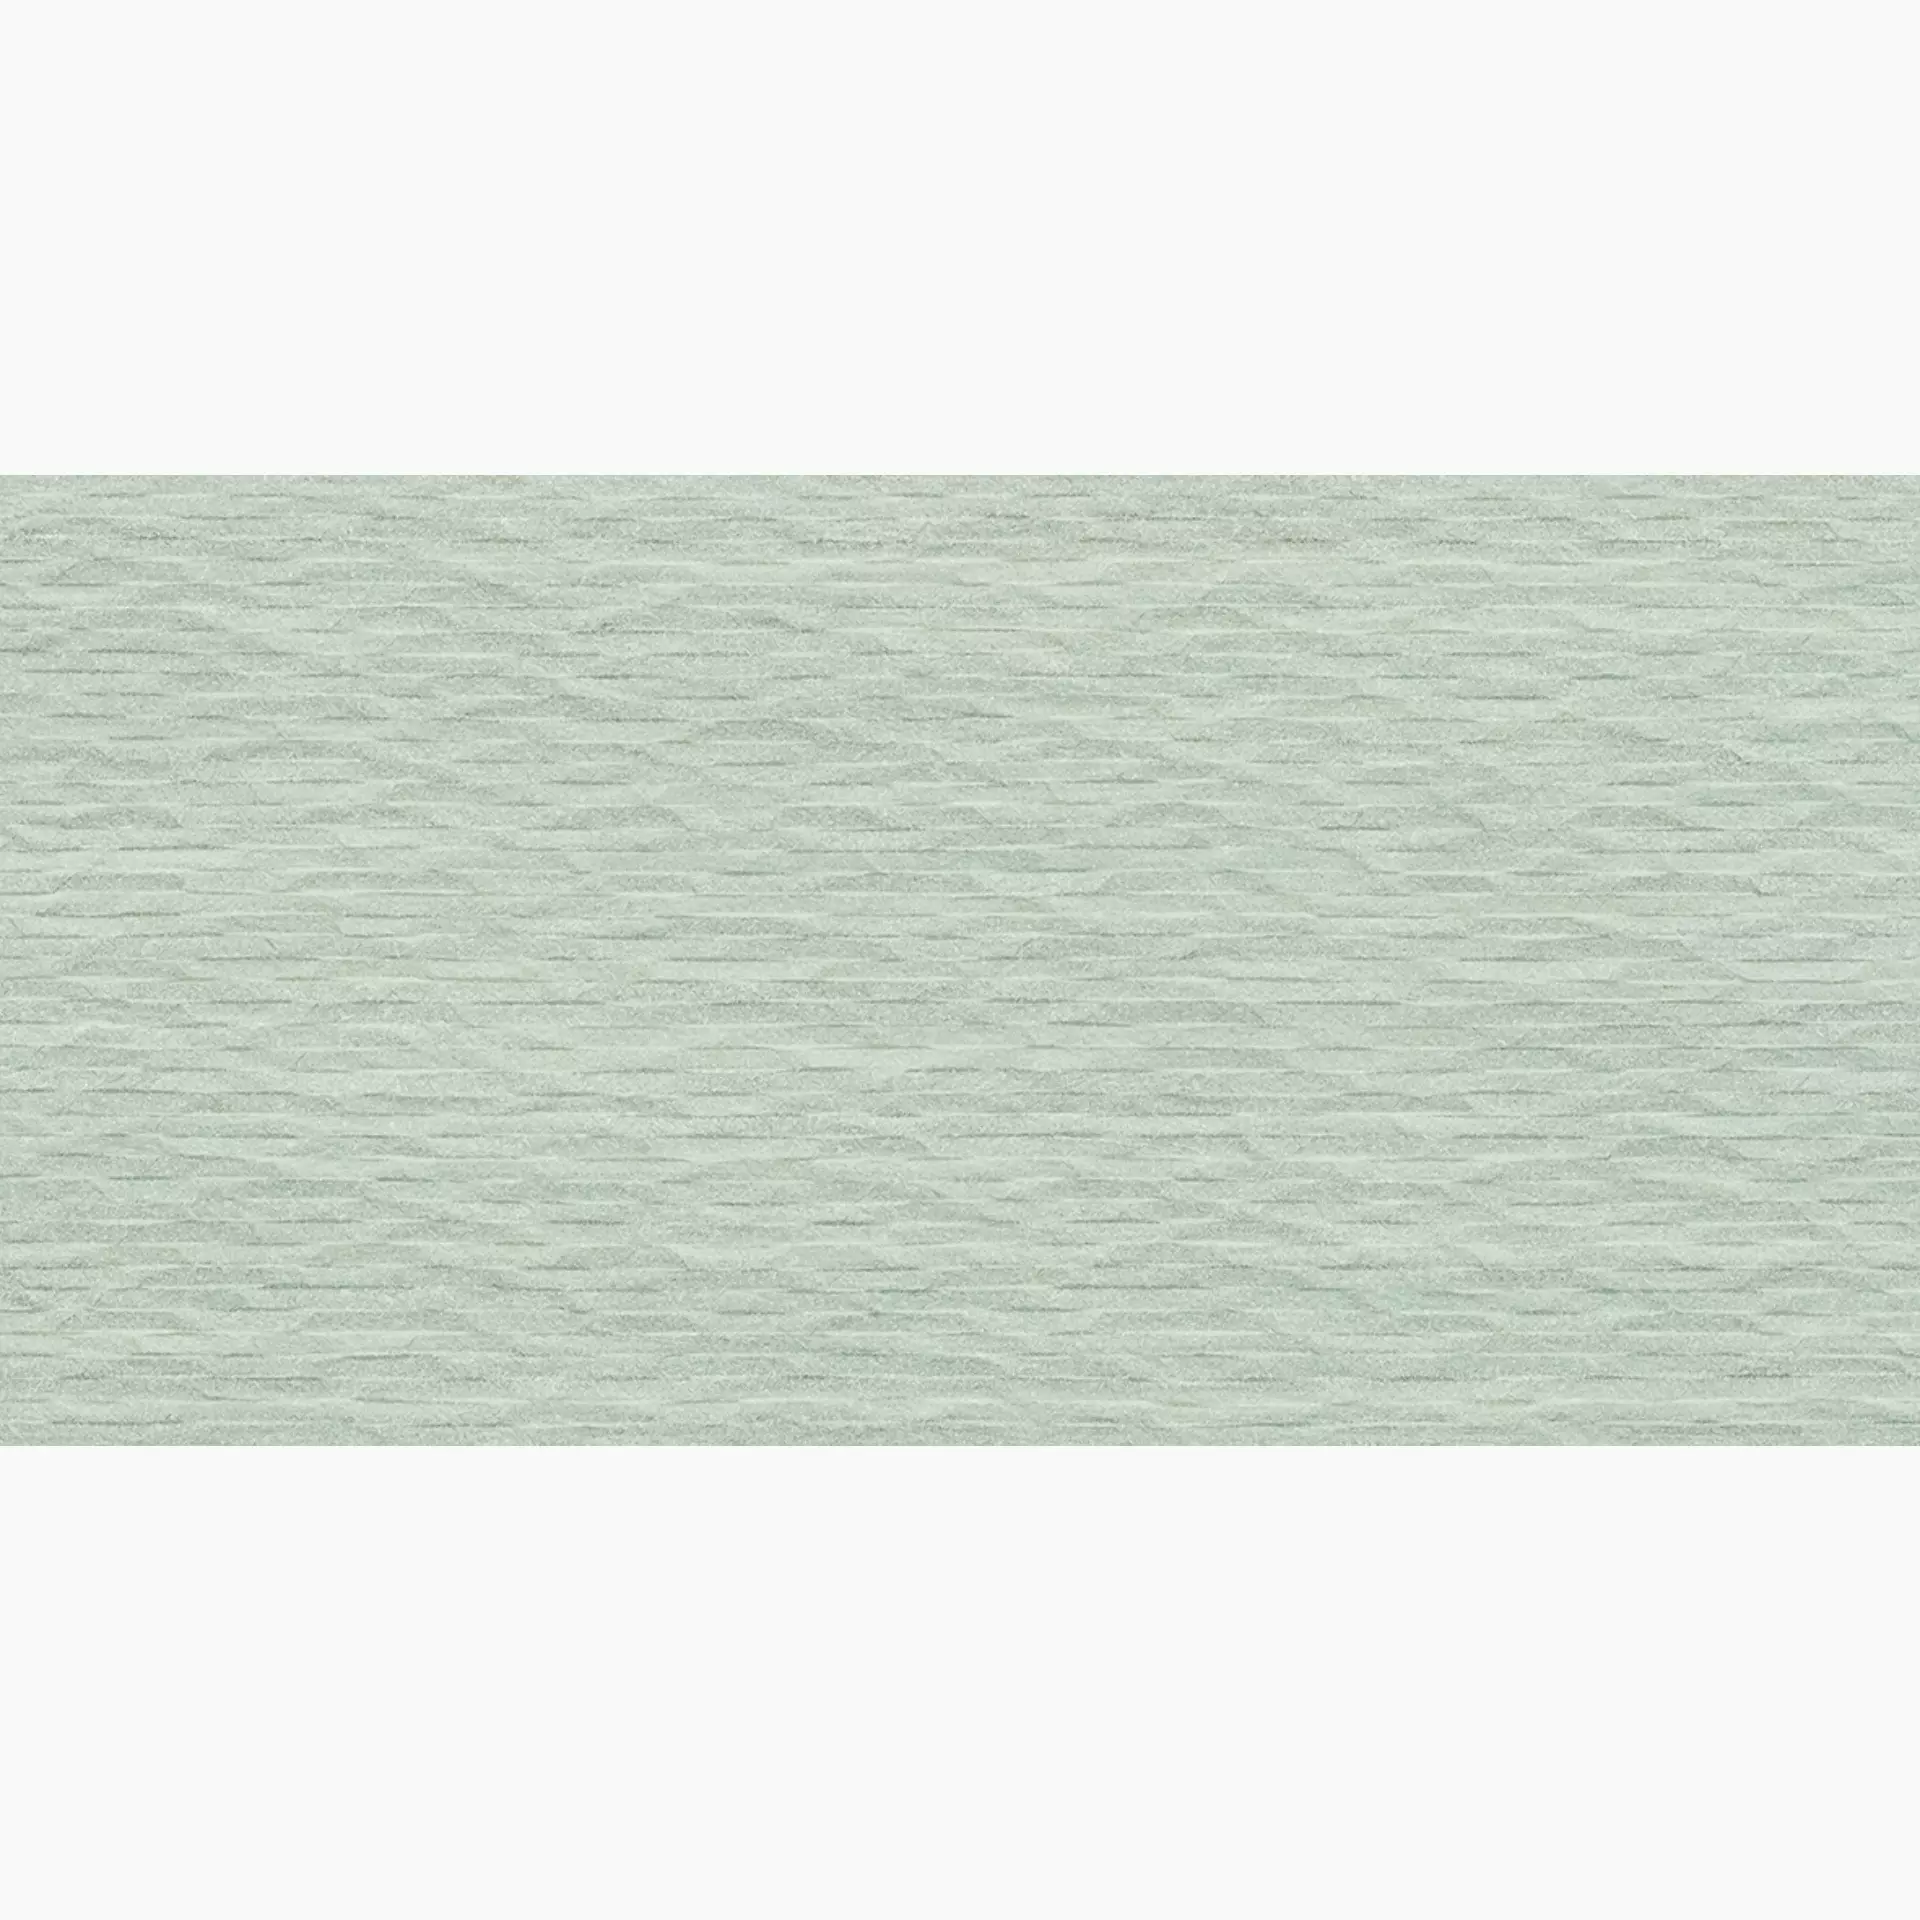 Ergon Elegance Pro Grey Naturale Grey EK0P natur 60x120cm Mural rektifiziert 9,5mm